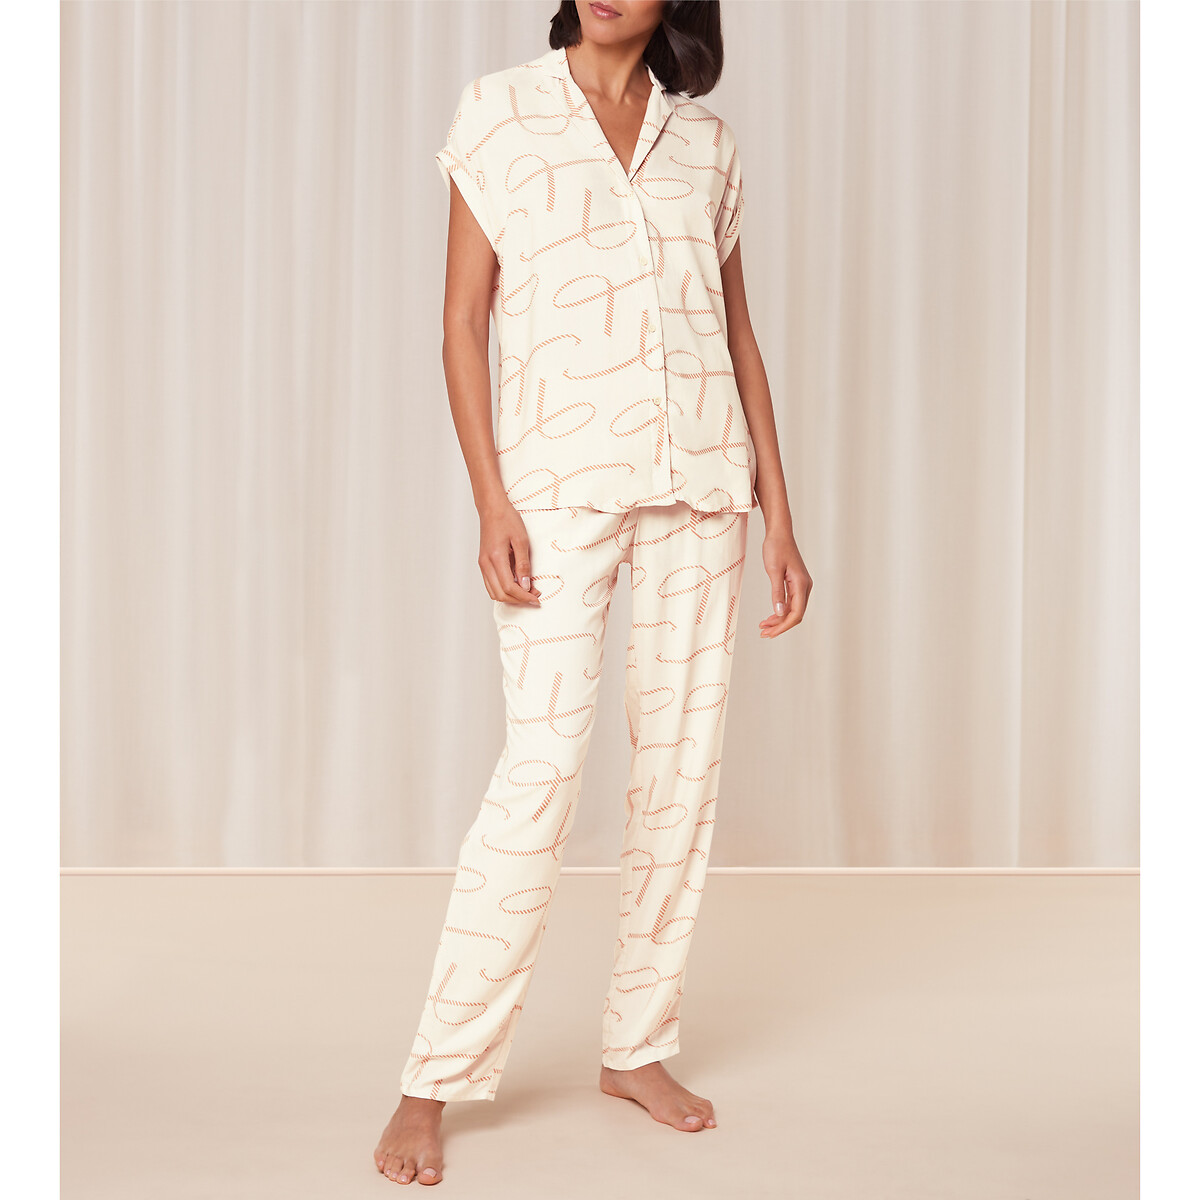 Image of Boyfriend Fit Printed Pyjamas with Short Sleeves